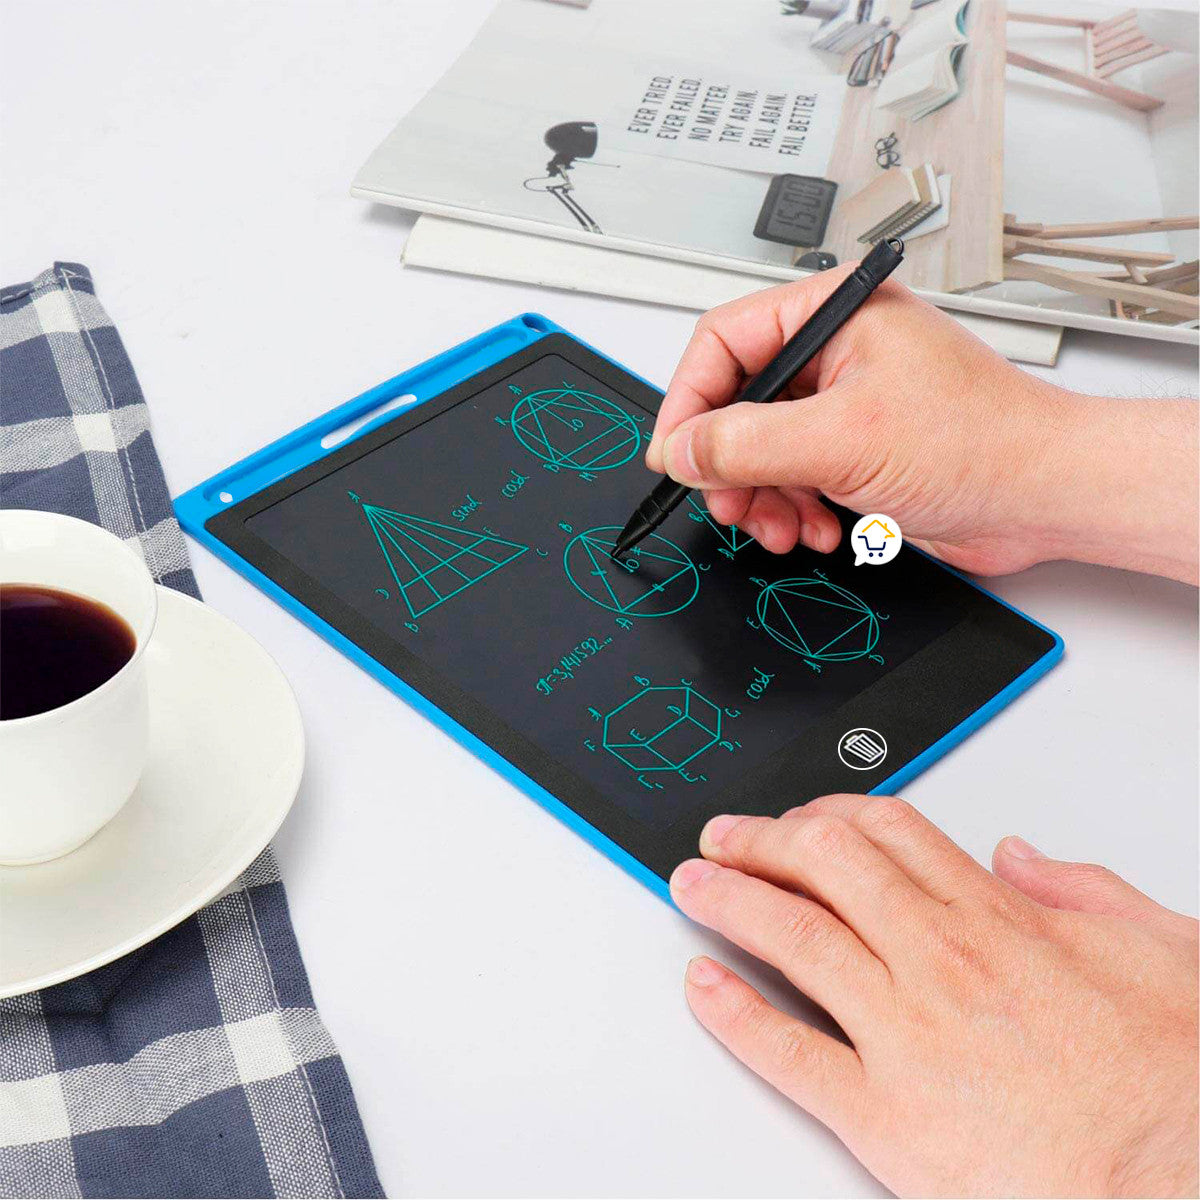 Tableta mágica LCD para dibujar 8.5 pulgadas